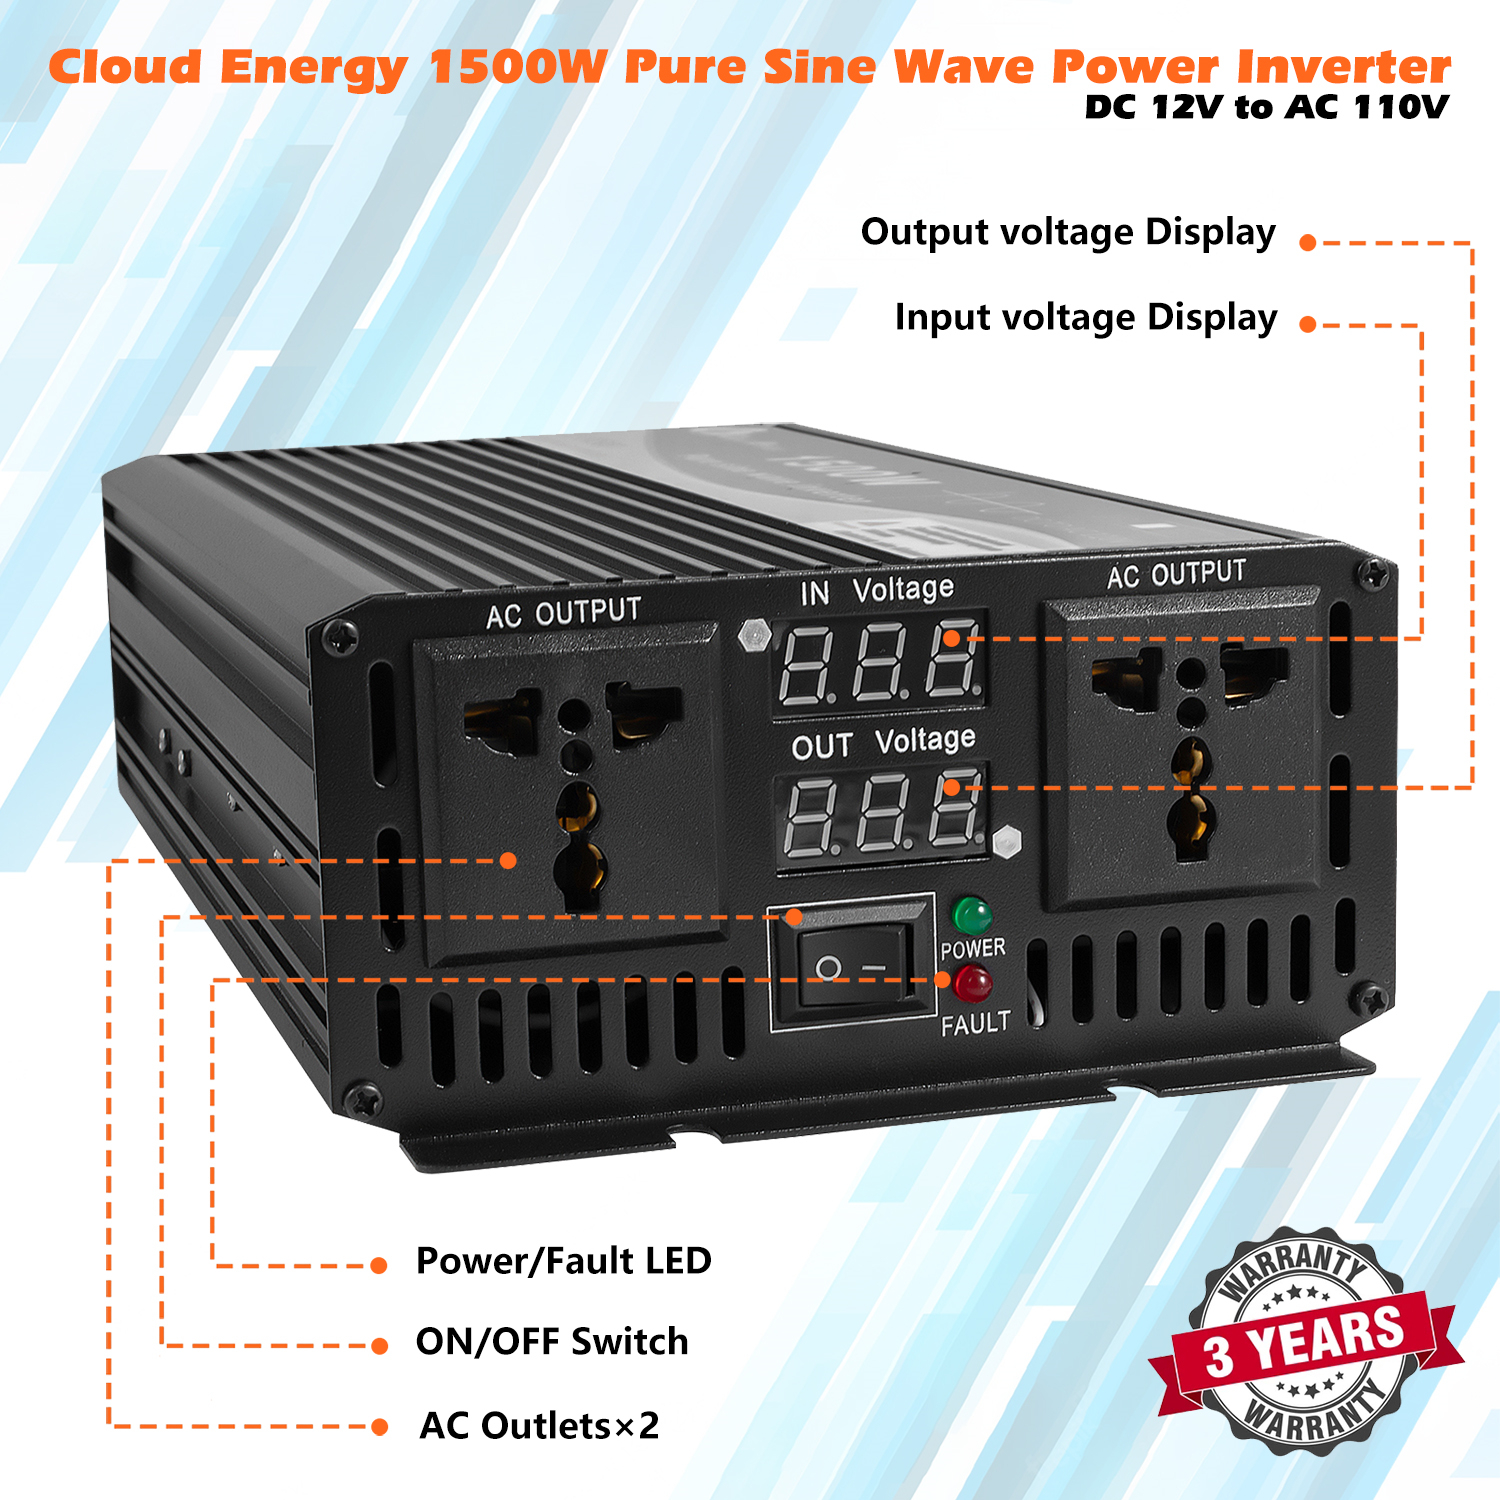 Cloudenergy 1500W Pure Sine Wave Inverter